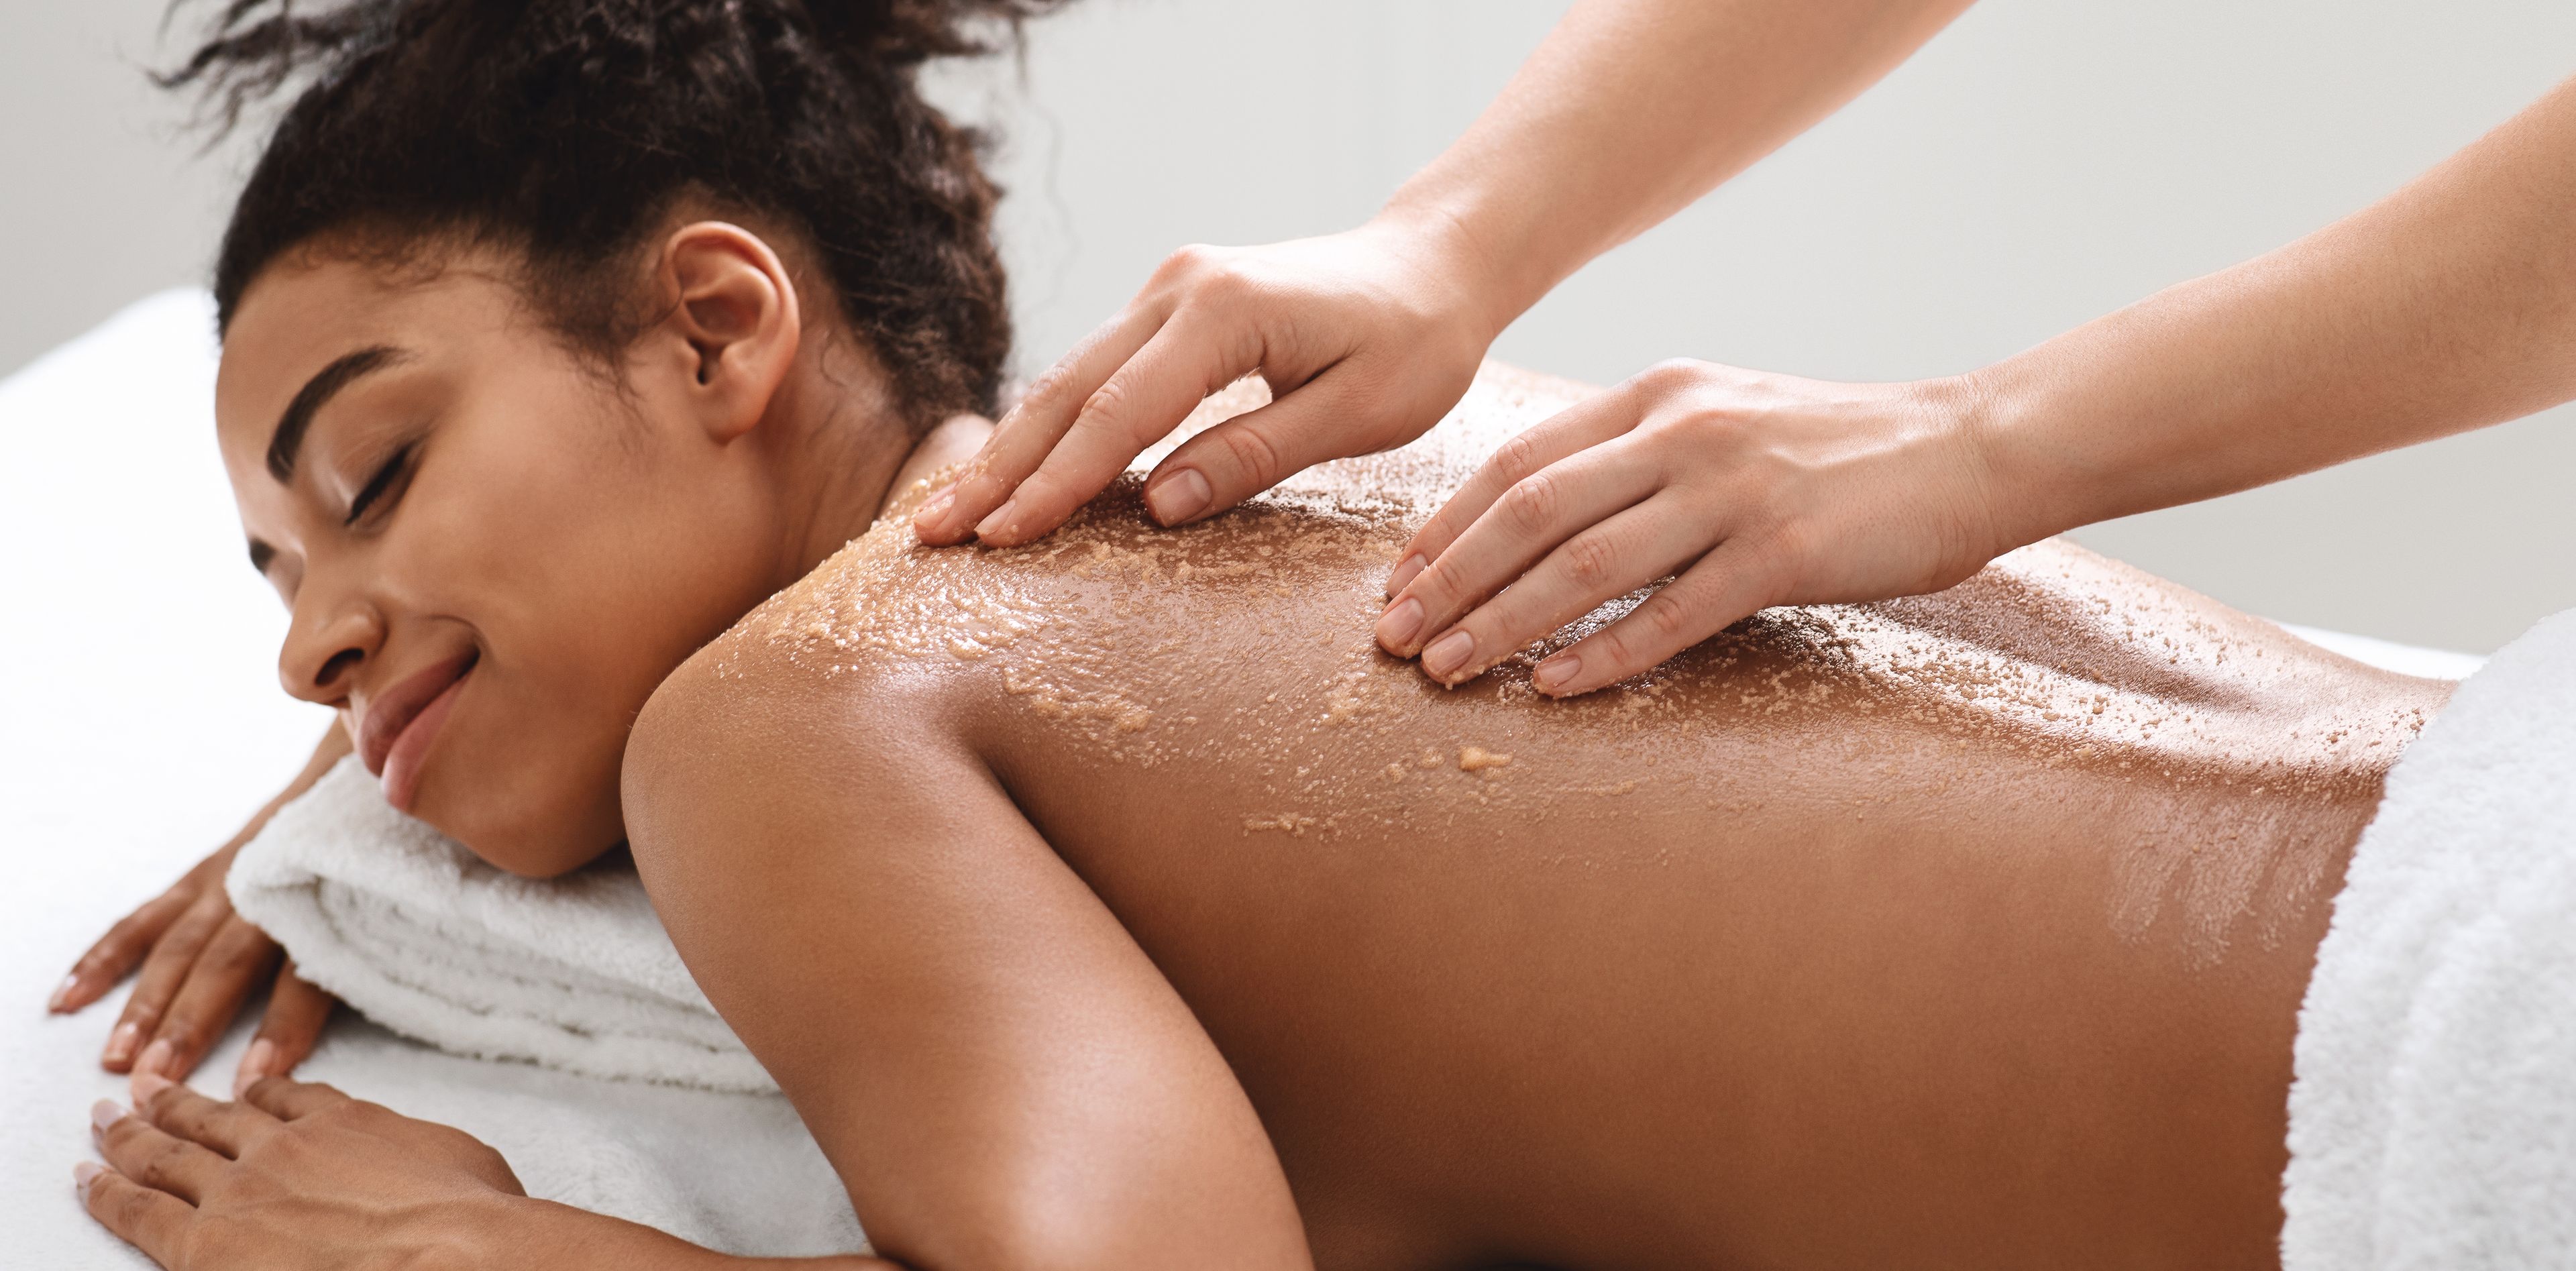 Woman gets back massage